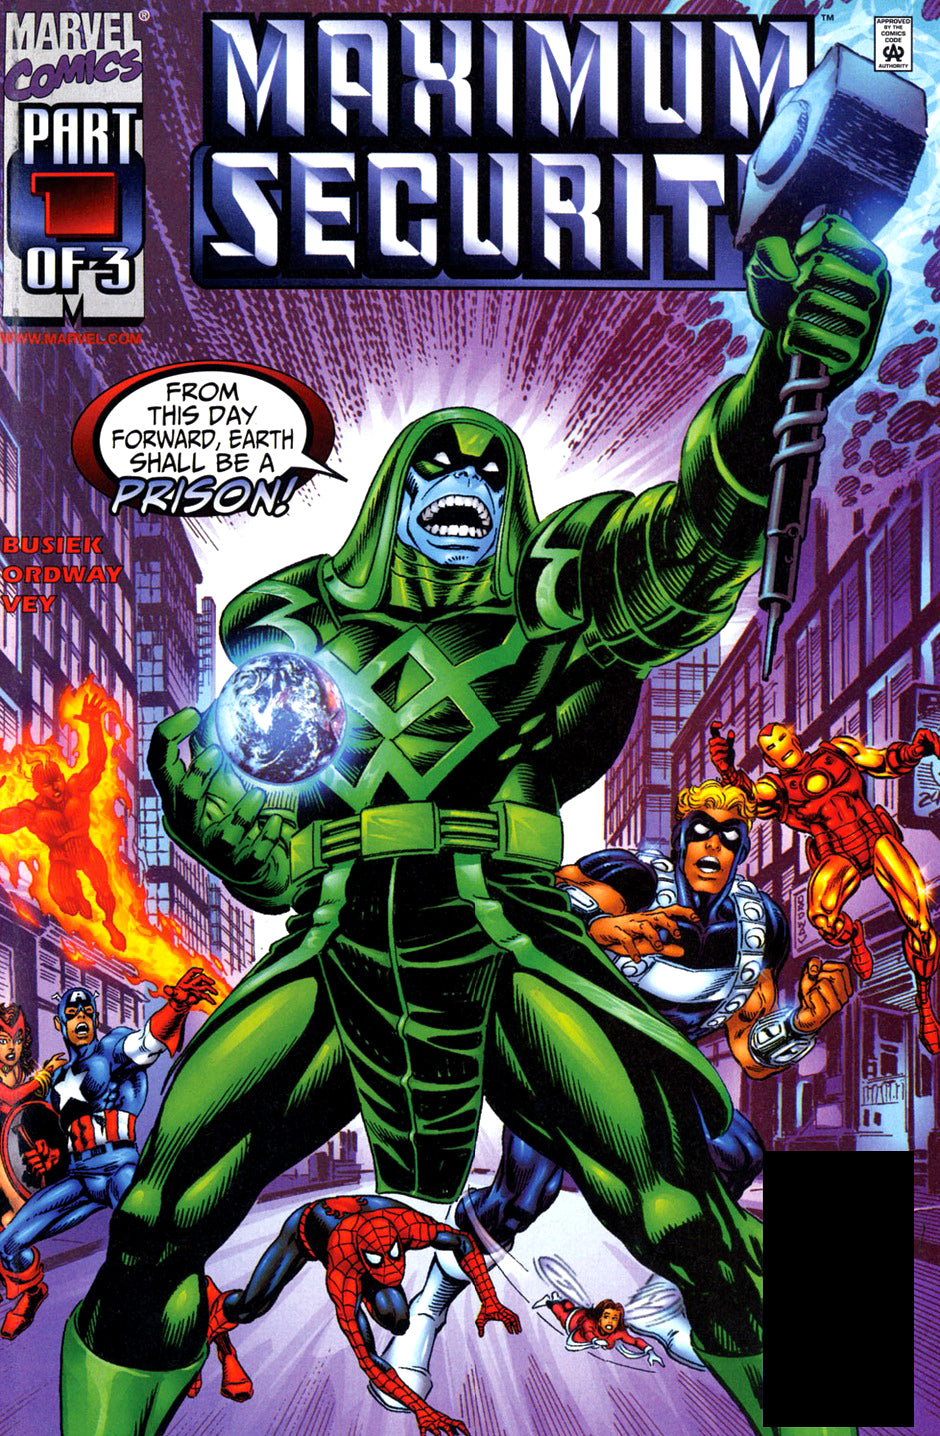 MAXIMUM SECURITY #1-3 (2000 Marvel Comics) COMPLETE SET